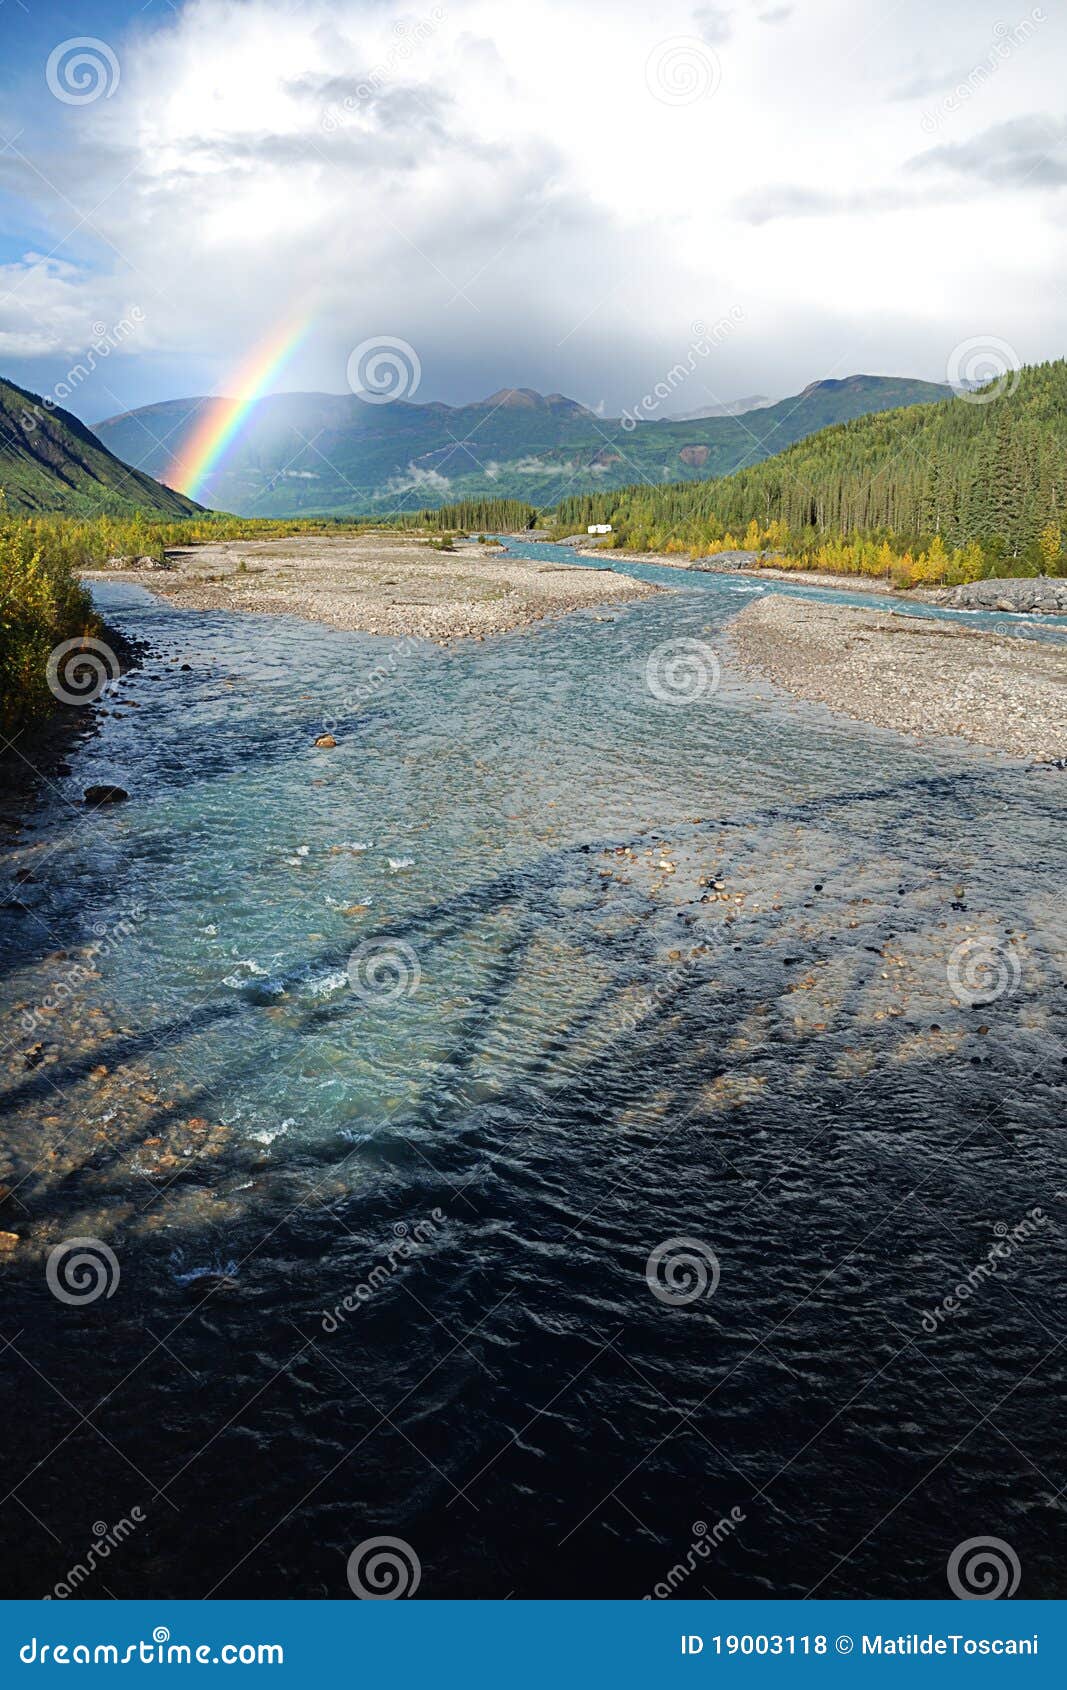 rainbow river